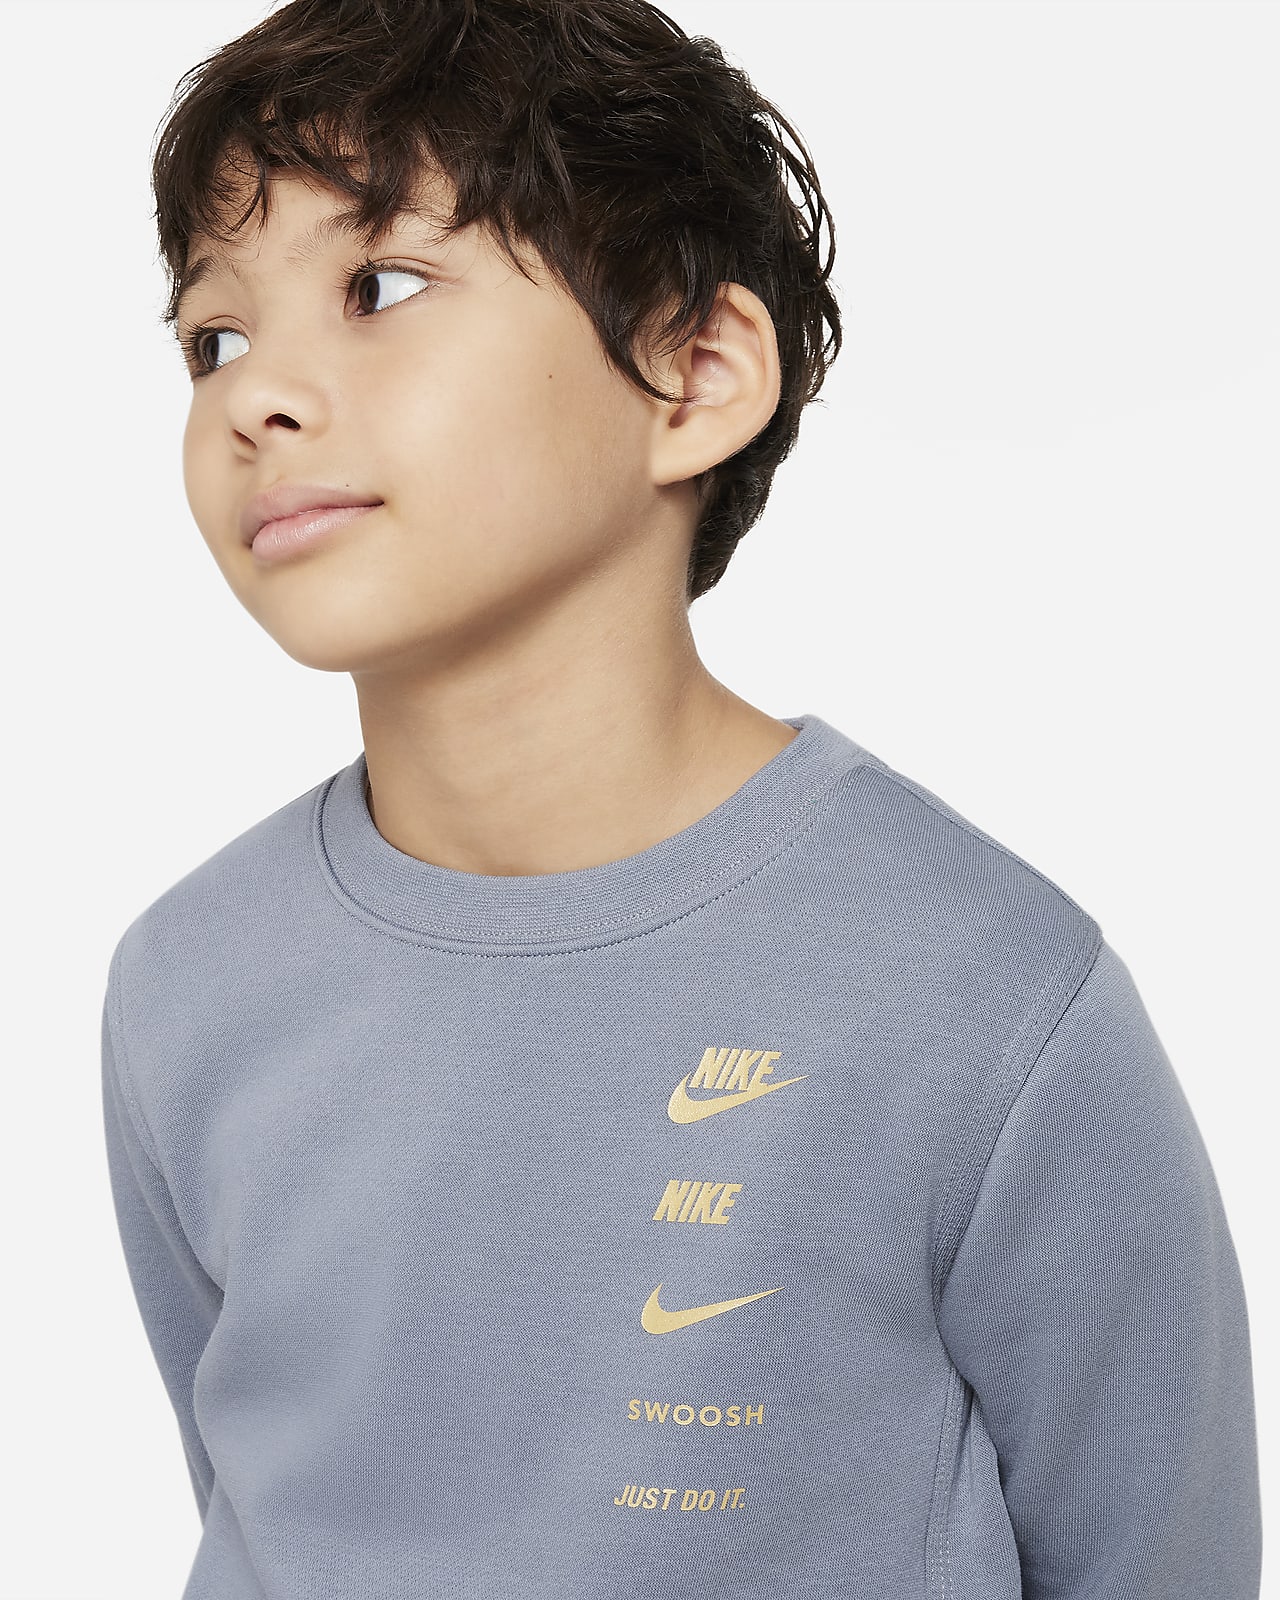 Nike Kids NSW Trend Fleece Crew Sweatshirt (Little Kids/Big Kids